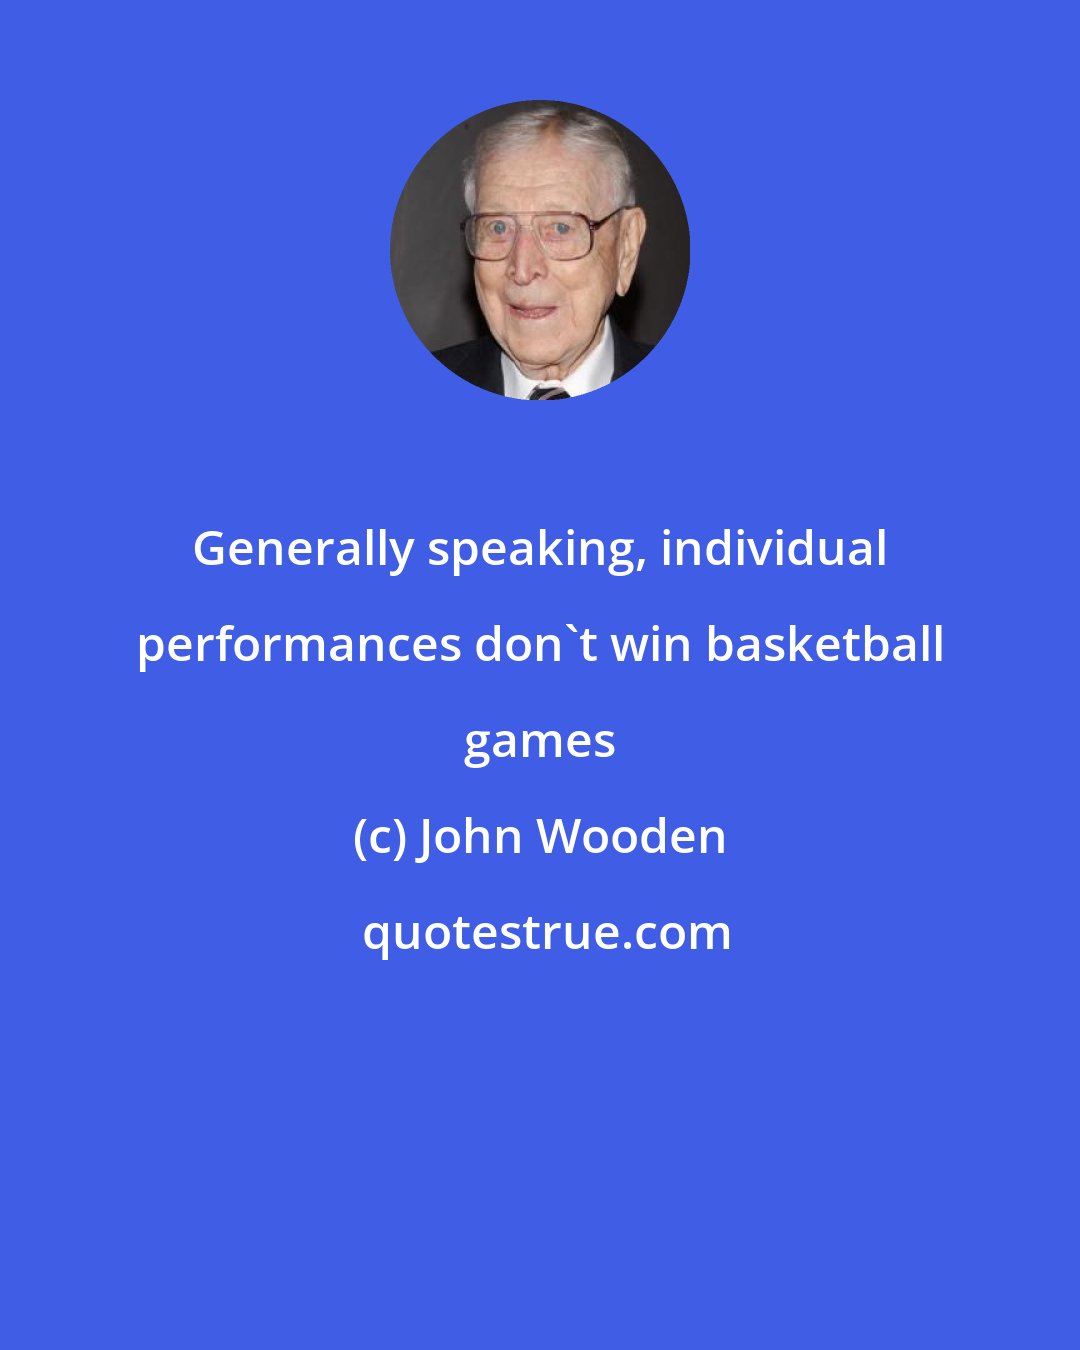 John Wooden: Generally speaking, individual performances don't win basketball games